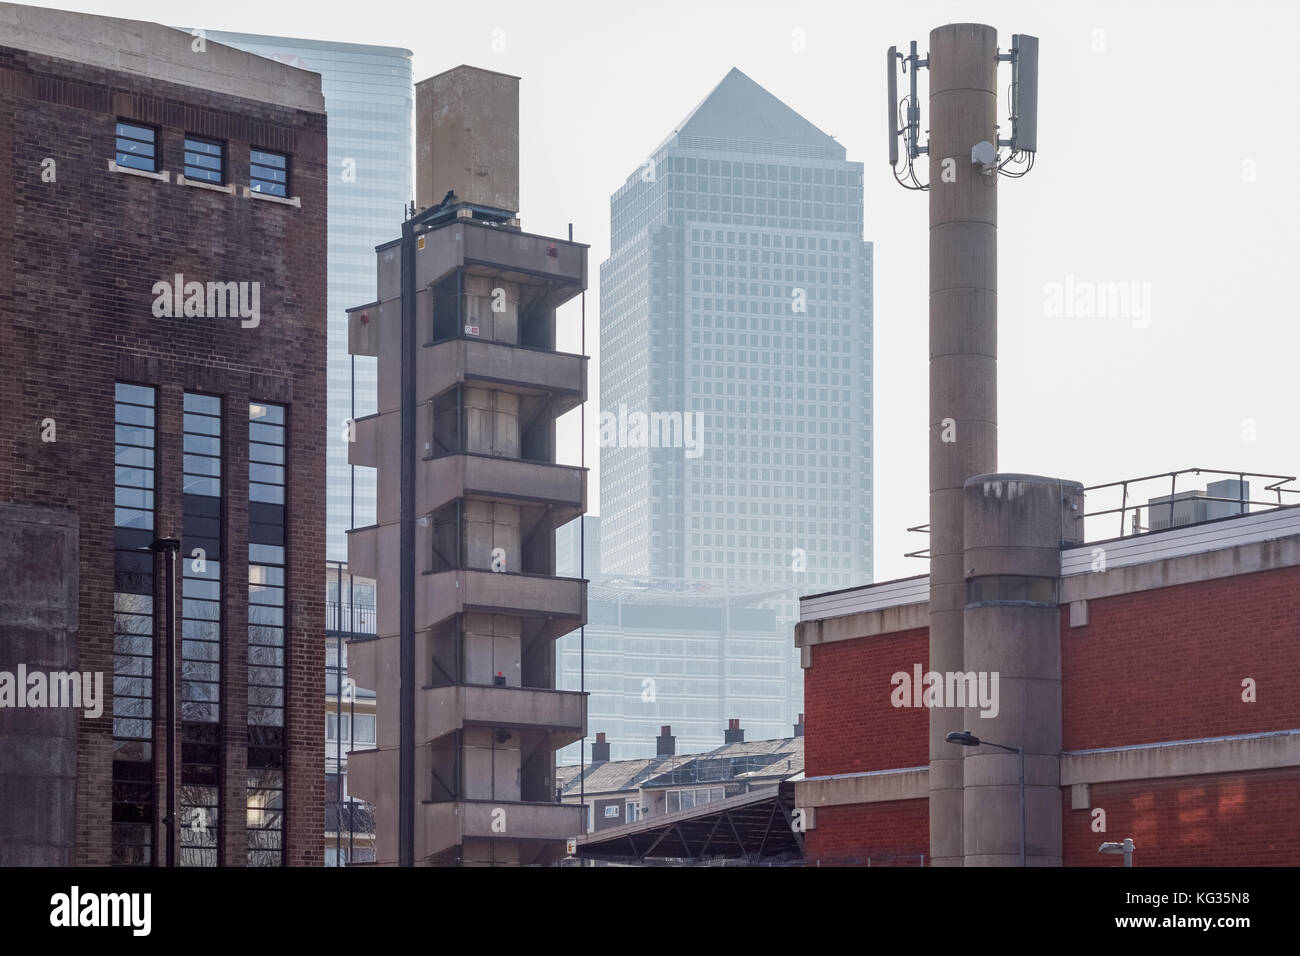 London, UK, 24. Oktober 2017 - Wolkenkratzer in Canary Wharf durch alte Industrie Gebäude in Pappel, East London gesehen Stockfoto